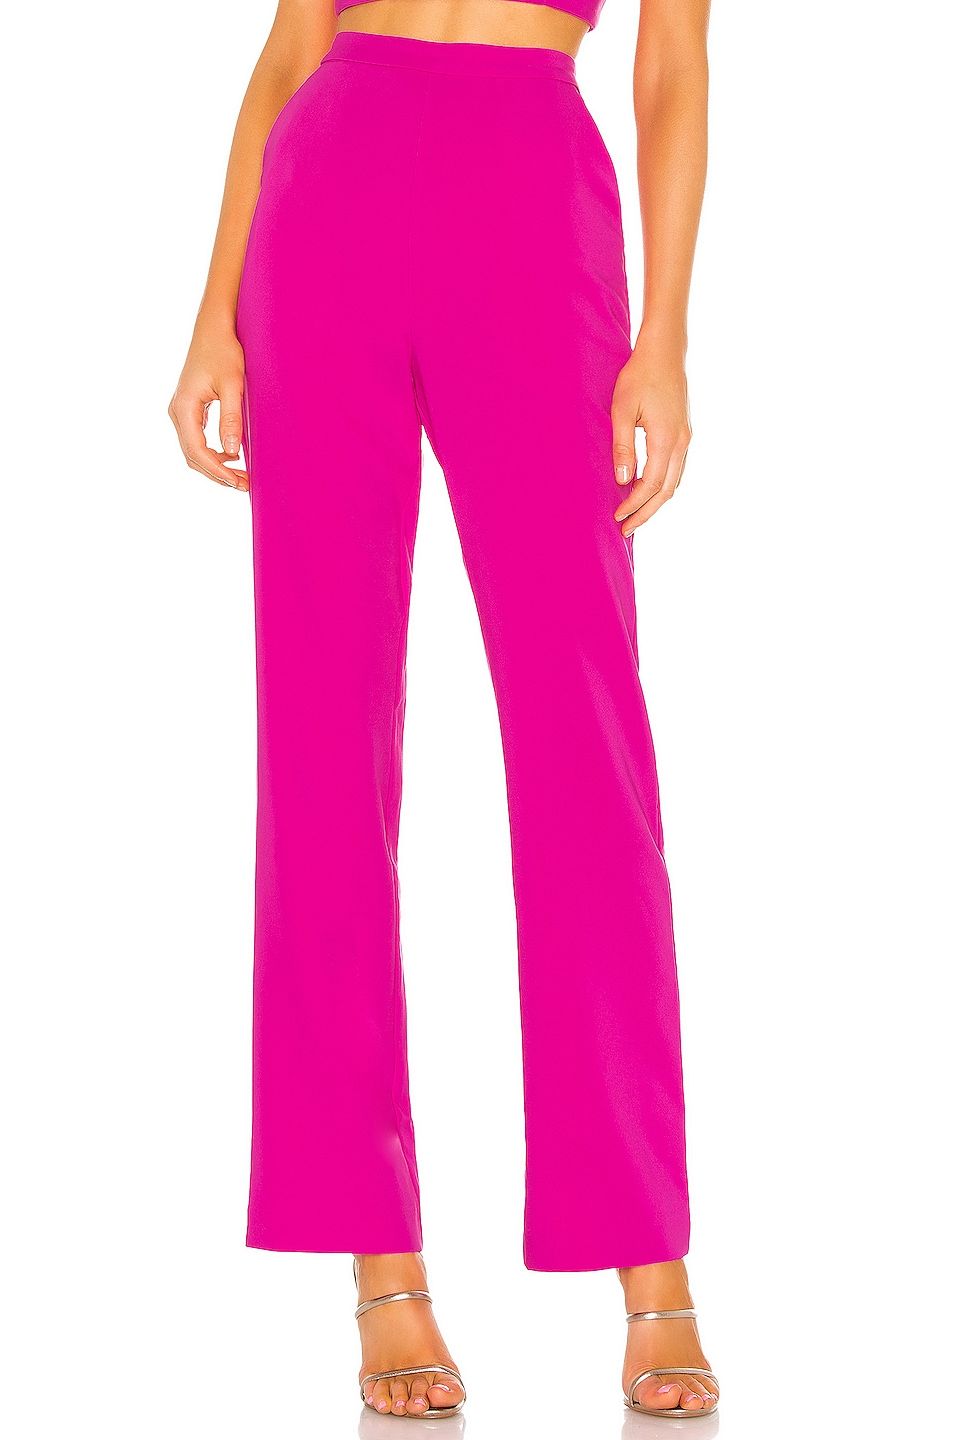 SweatyRocks Women's High Waist Straight Leg Zipper Jeans Casual Raw Hem  Denim Pants Trousers with Pockets Pink Petite XXS at  Women's Jeans  store